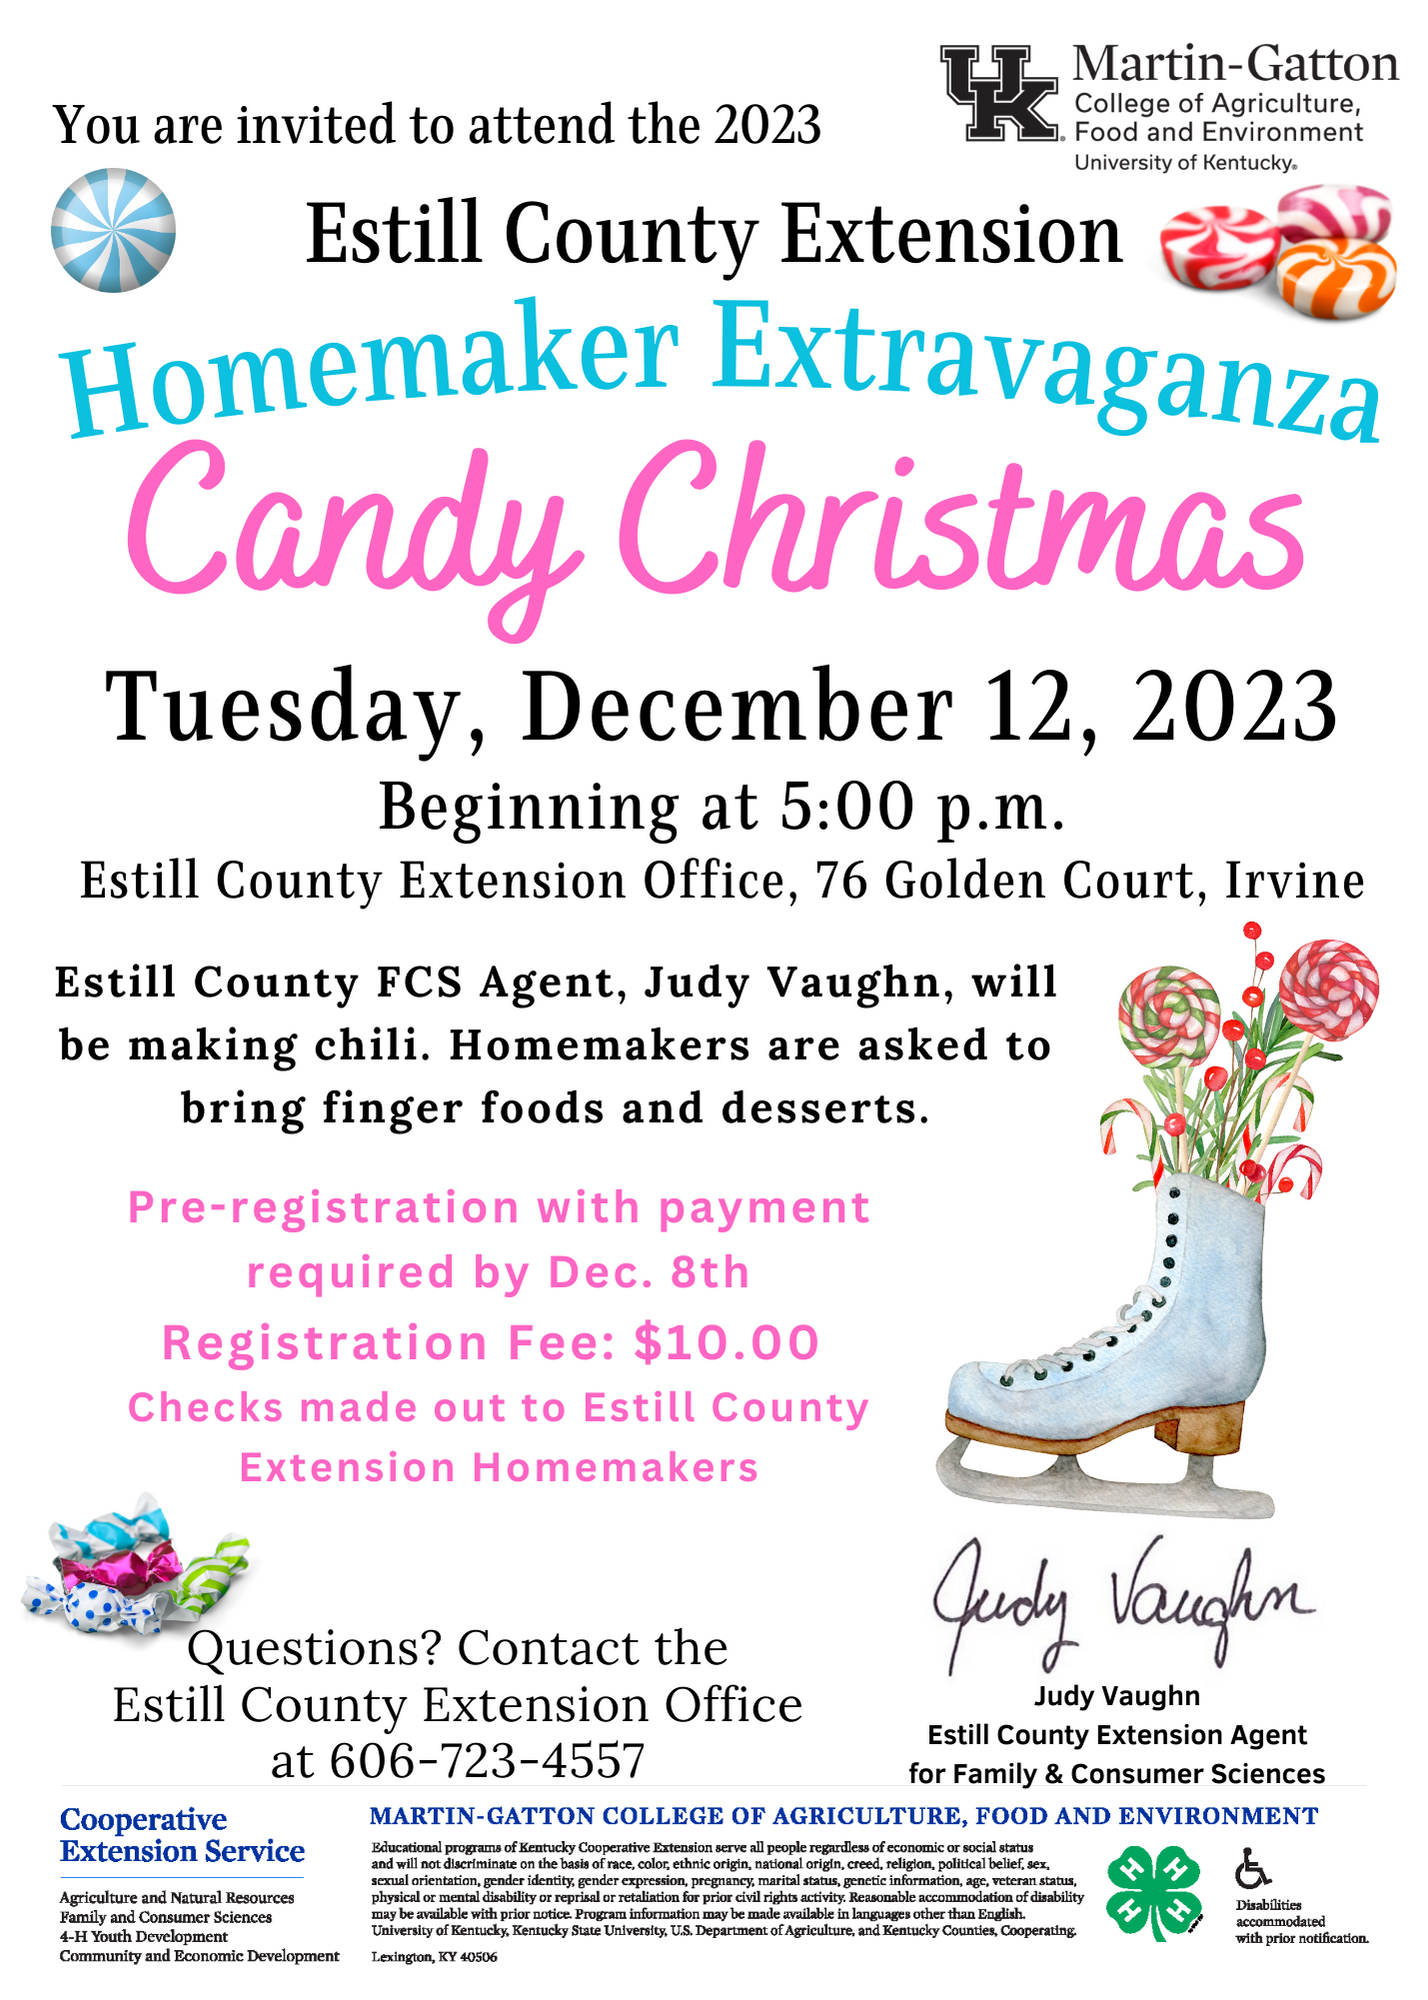 Details for the Estill County Homemaker Extravaganza on December 12th 